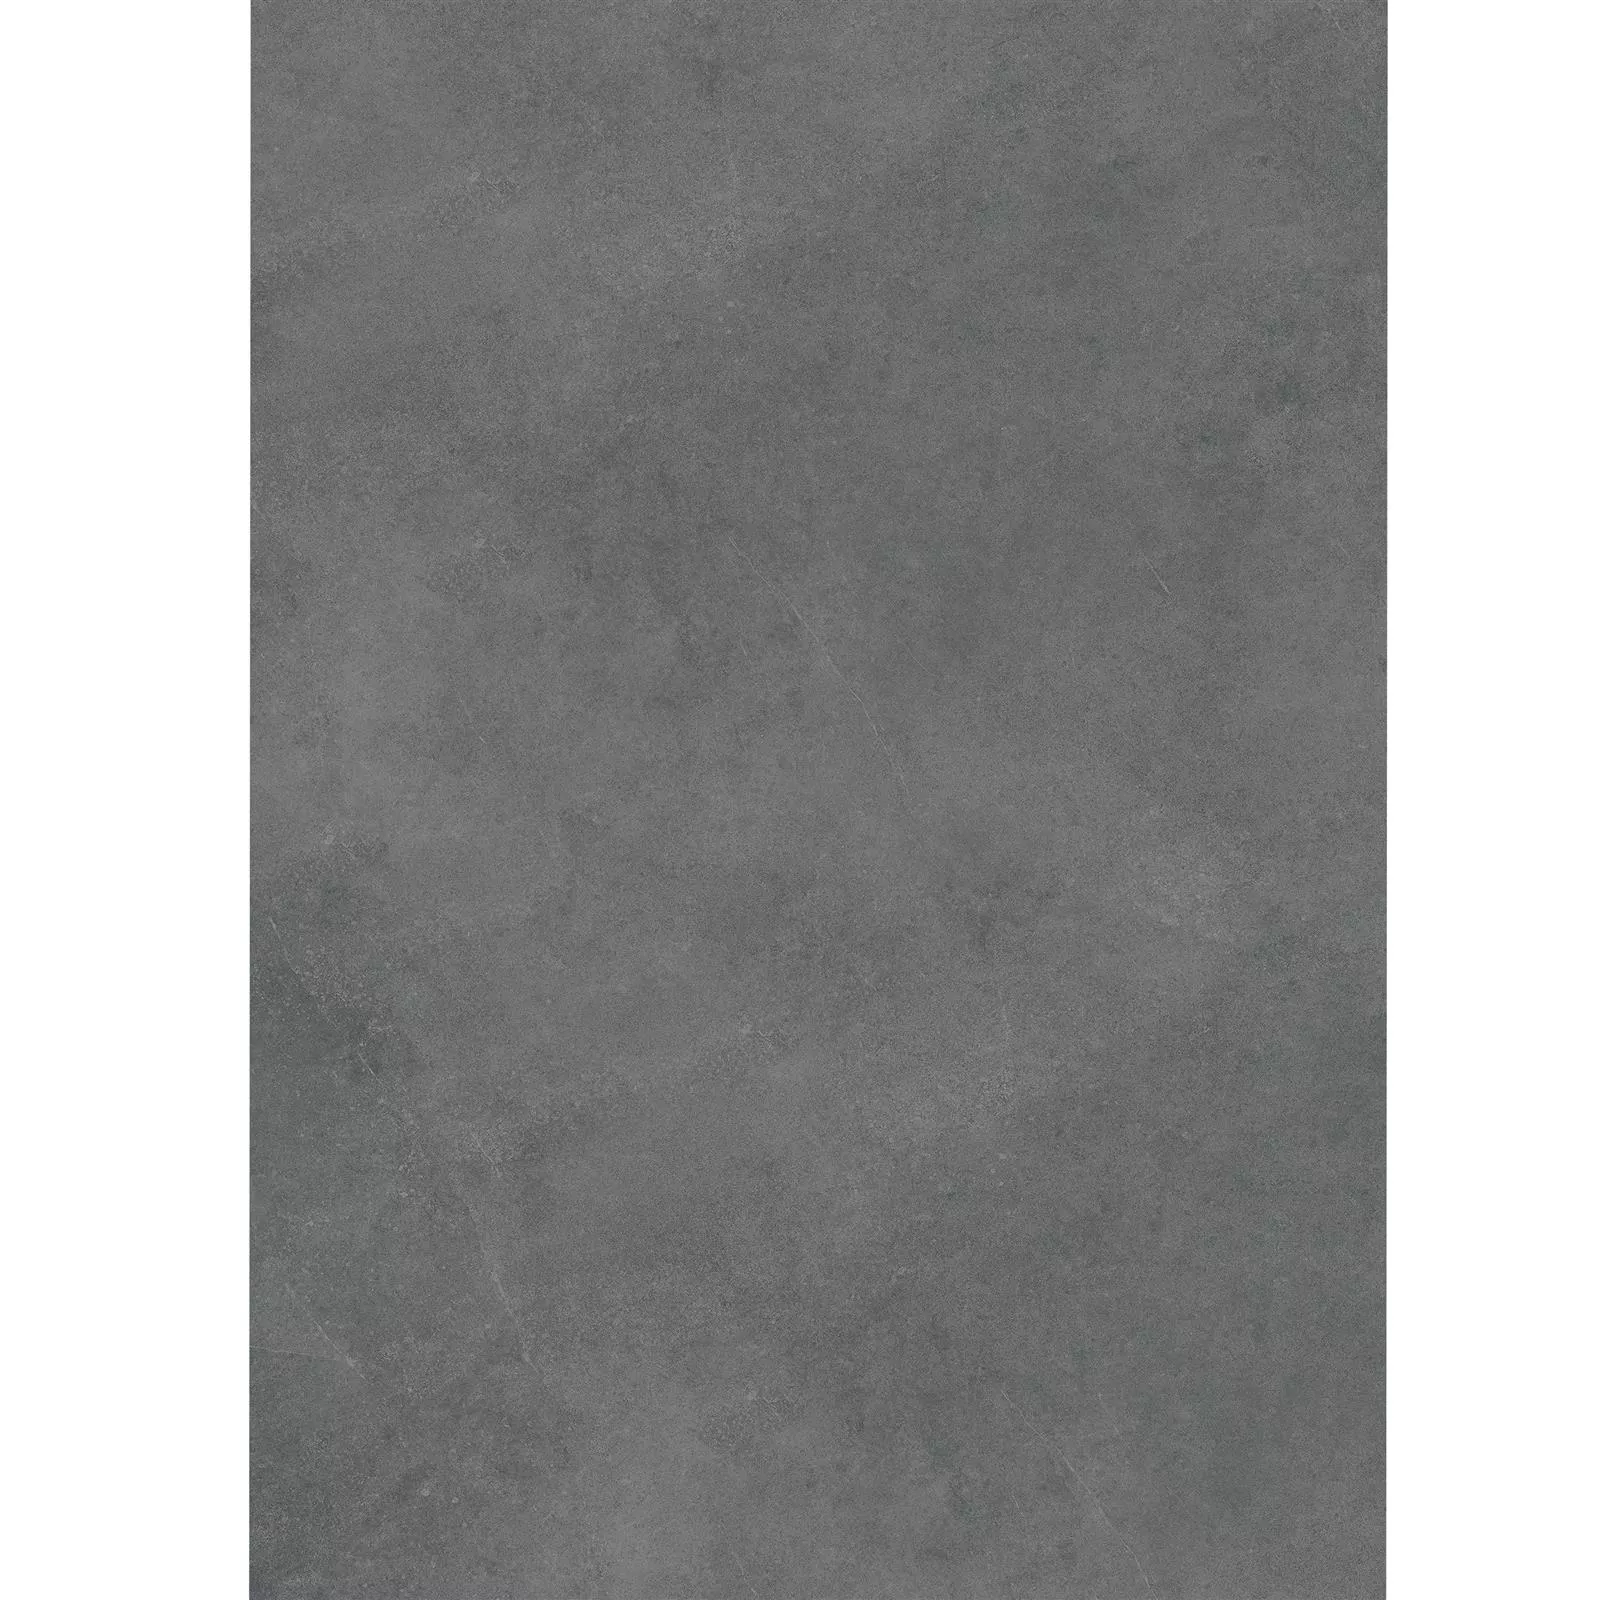 Prov Terass Klinker Cement Optik Glinde Antracit 60x120cm